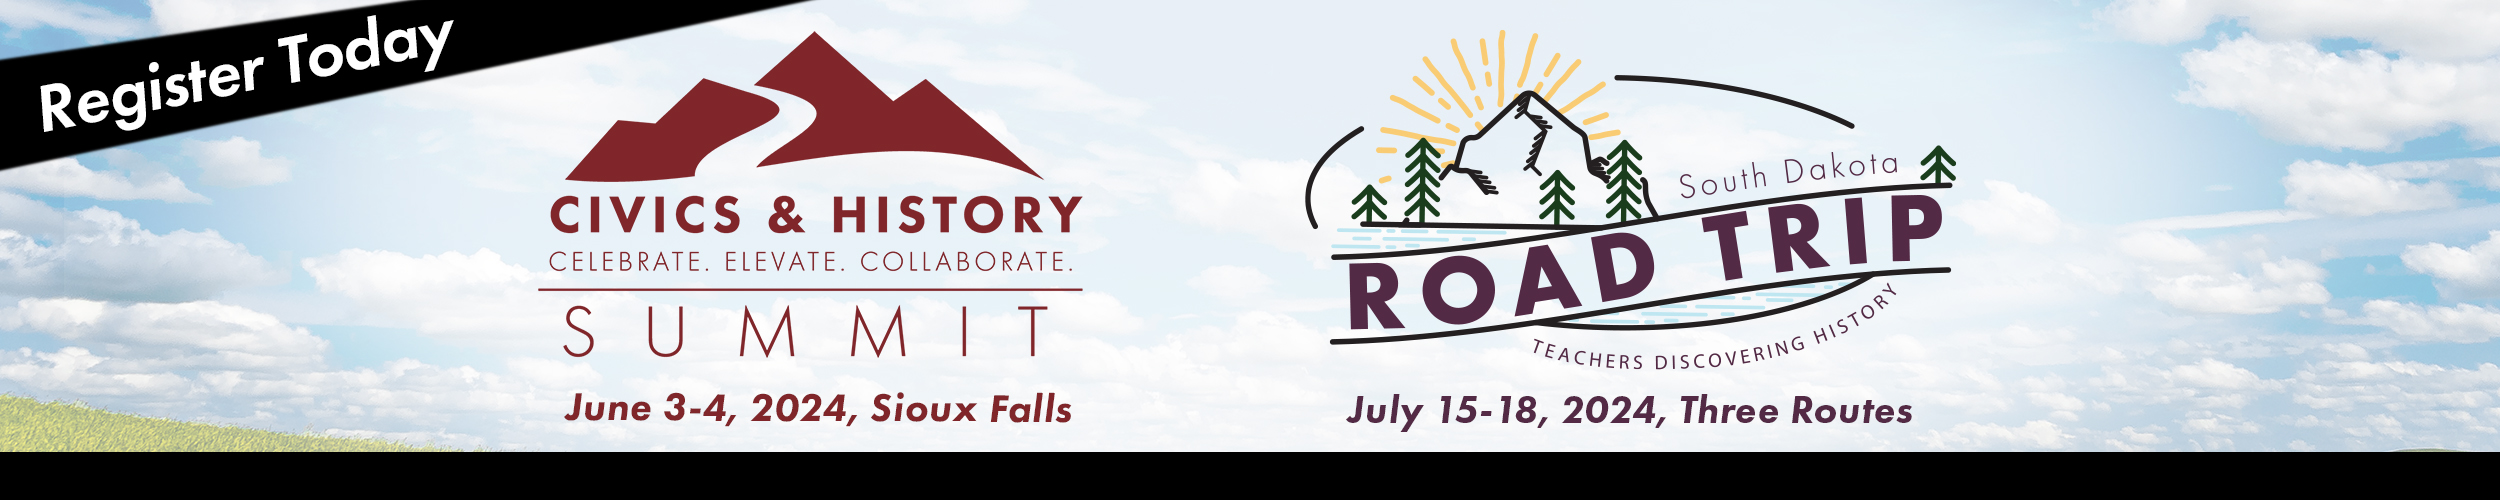 Register today. Civics and History Summit. South Dakota Road Trip. Link.